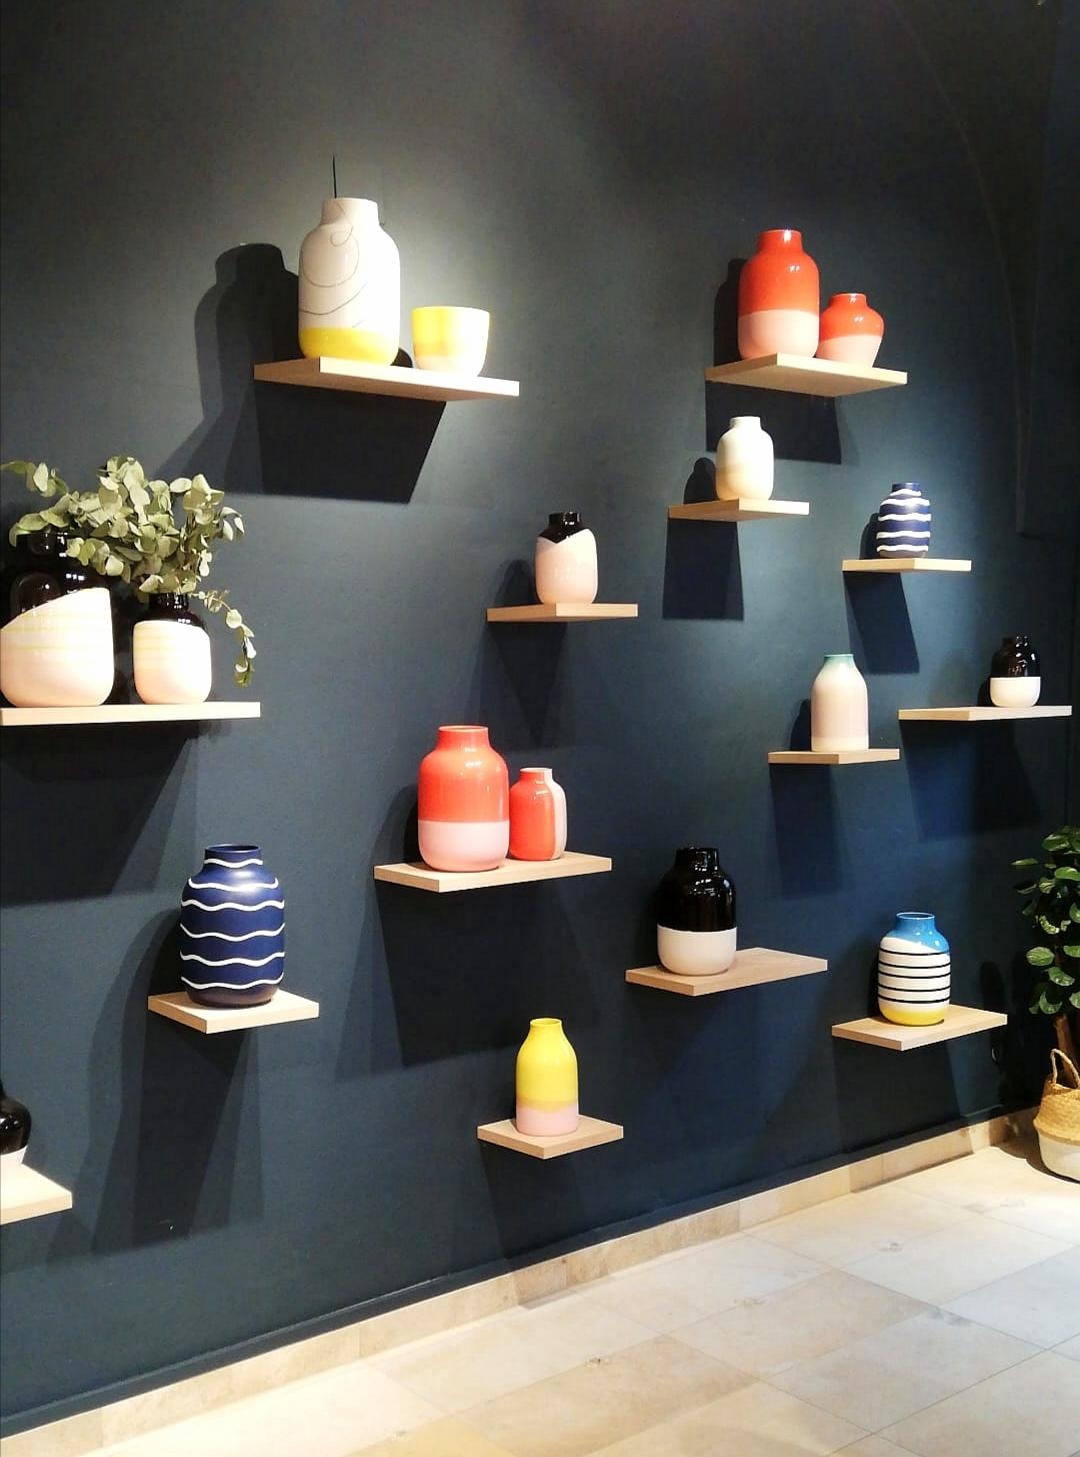 #motelamiio #newshop #interiordesign #porcelaindesign #handmade #porcelain #porcelainloves #decor #decoration 